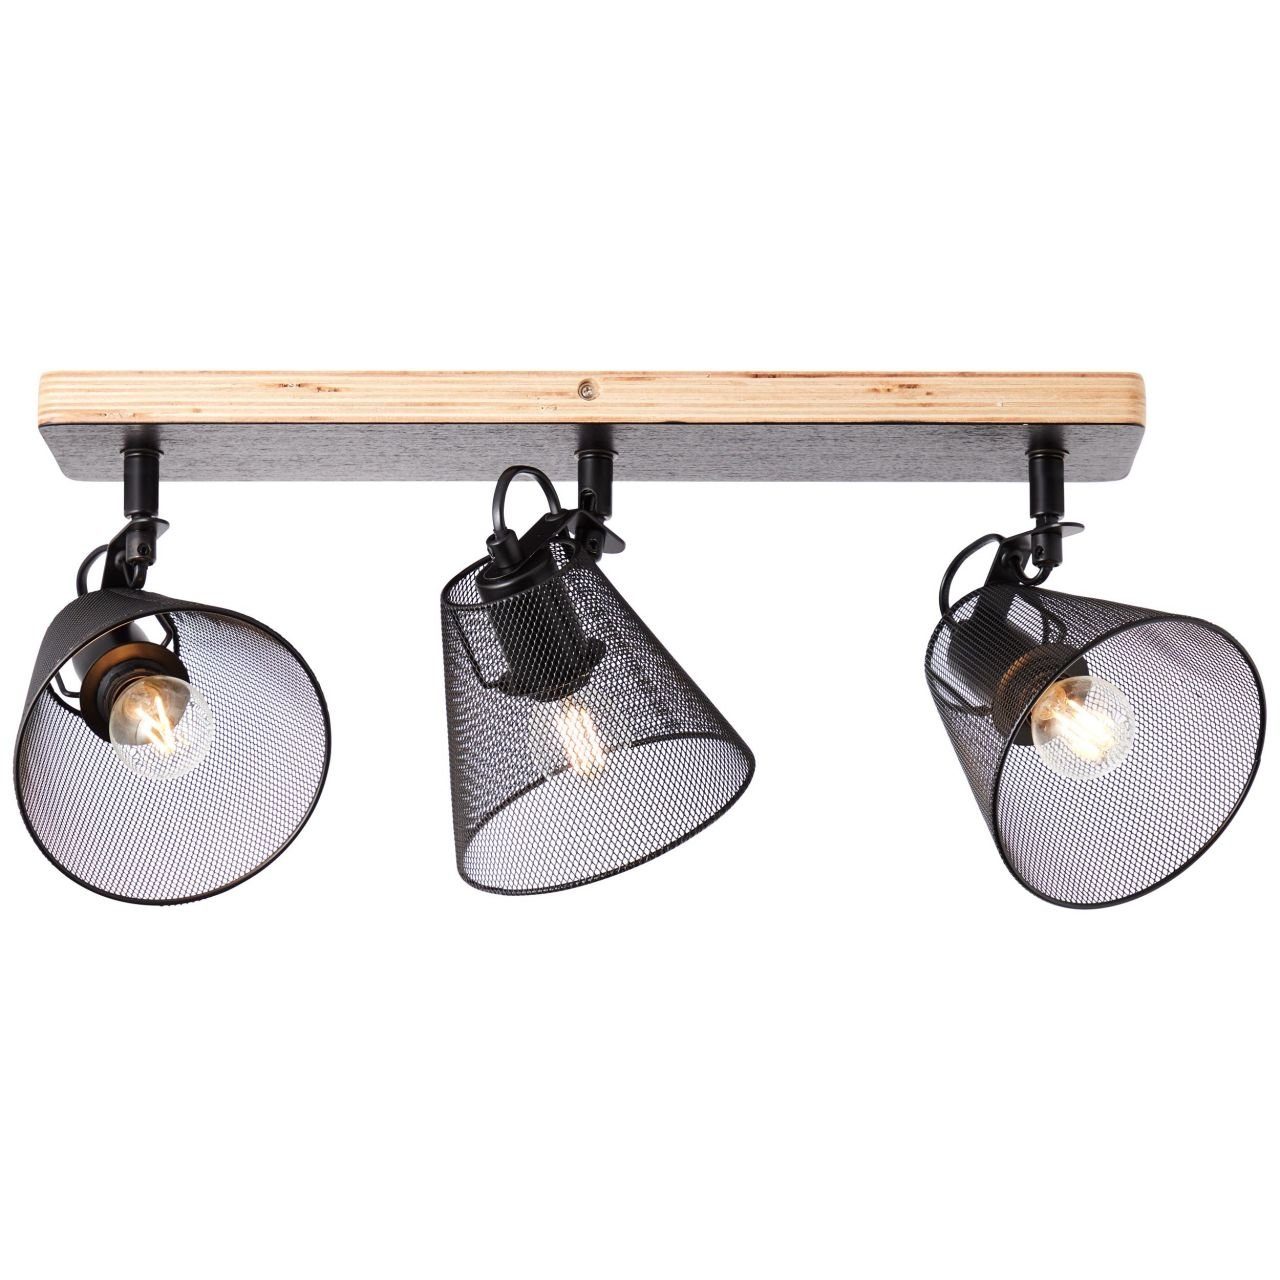 Lampe, Brilliant Whole D45 Deckenleuchte schwarz/holzfarbend, Metall/Holz, Spotbalken 3x Whole, 3flg